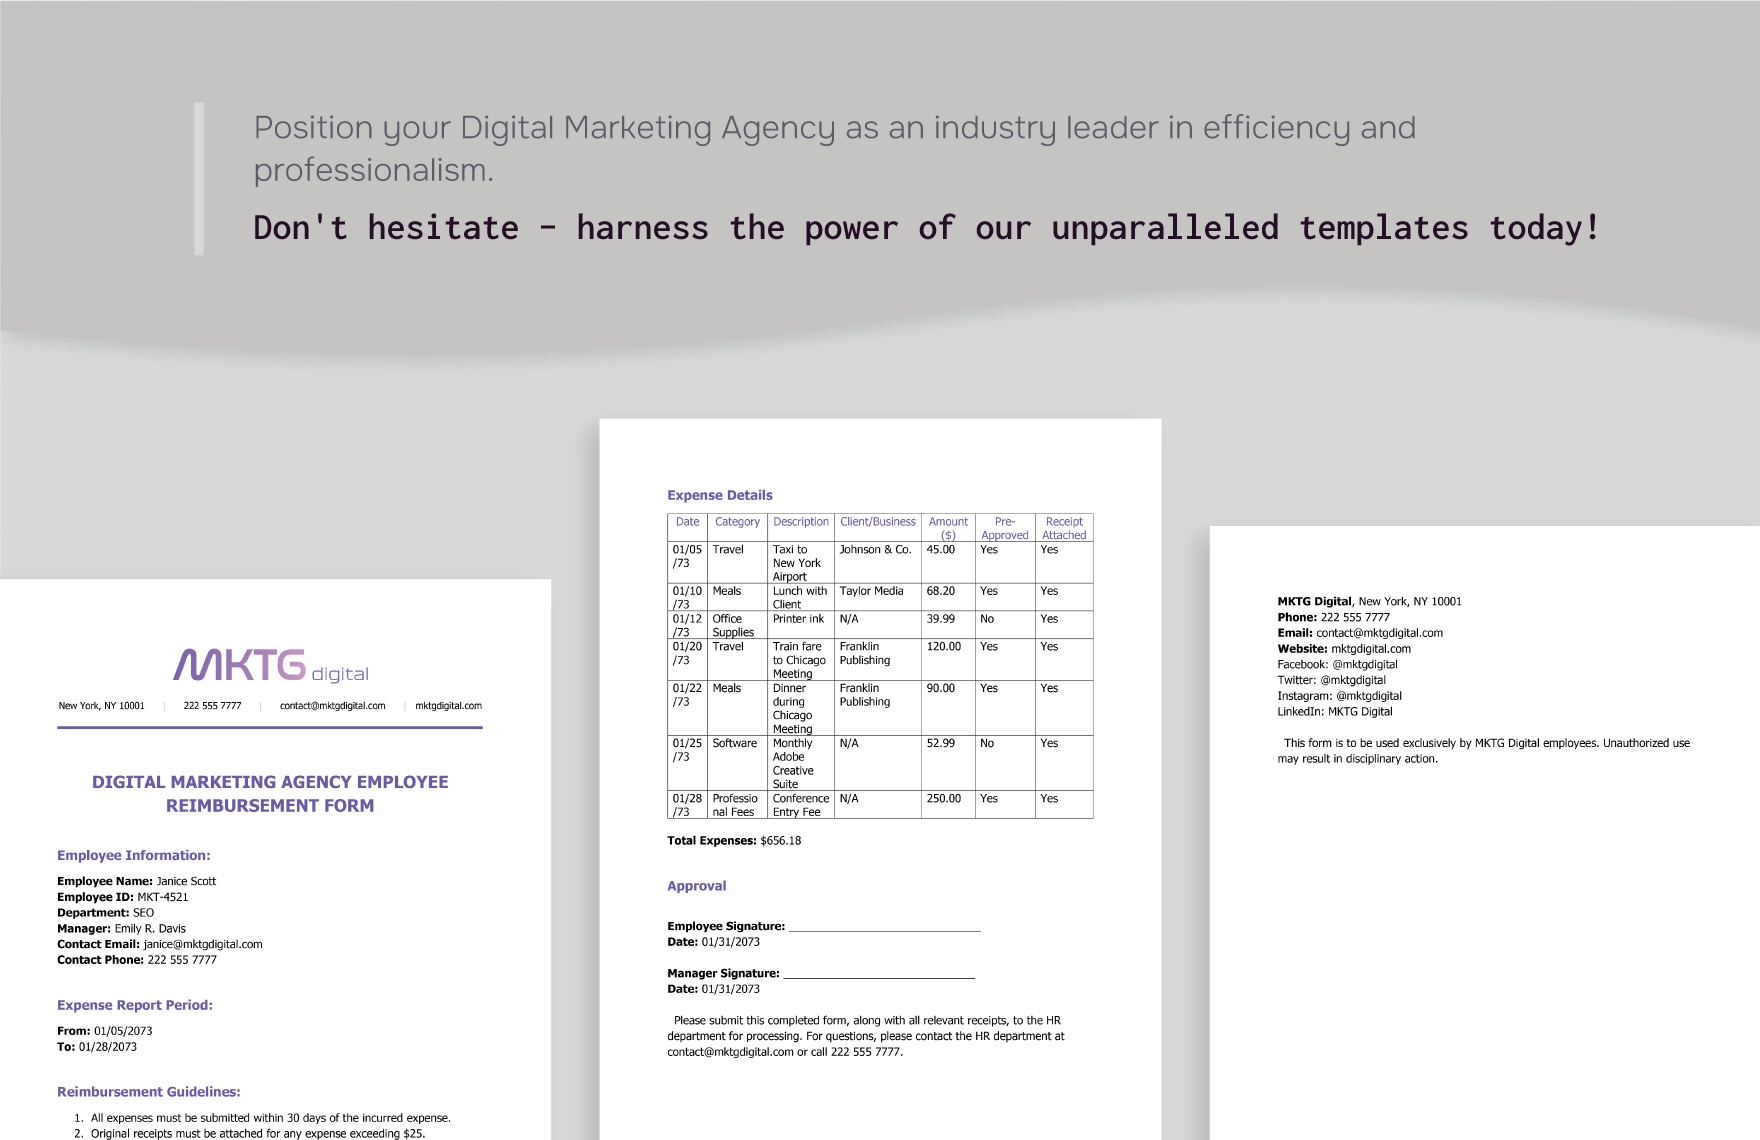 Digital Marketing Agency Employee Reimbursement Form Template